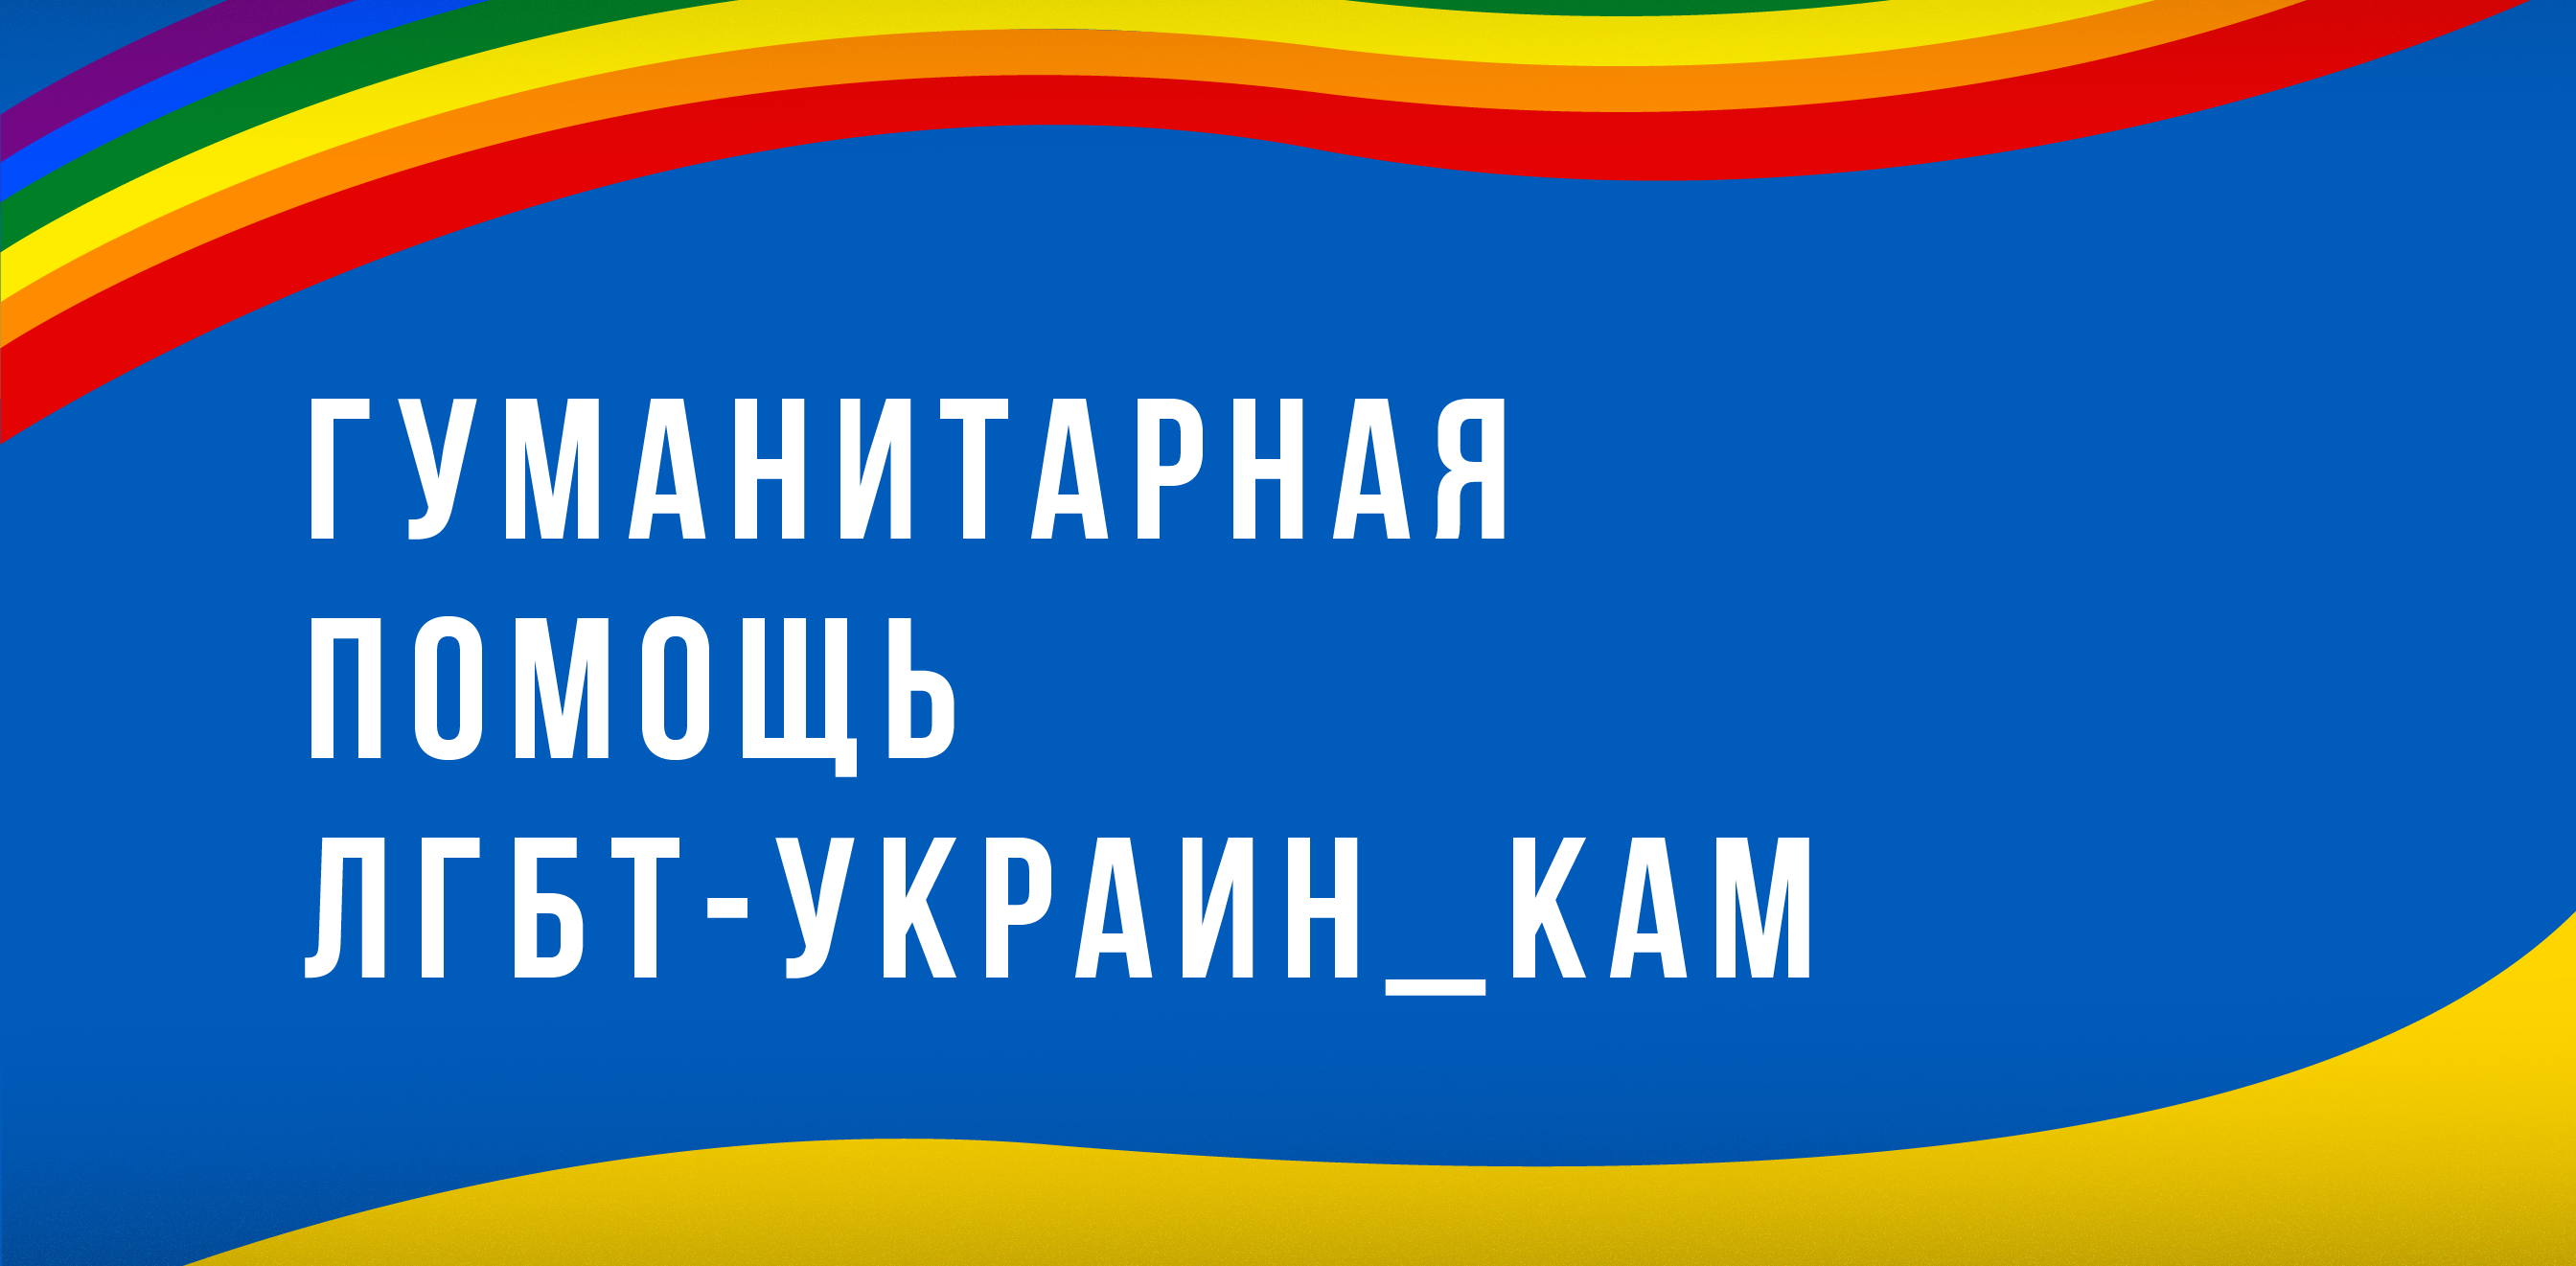 ЛГБТ Украины